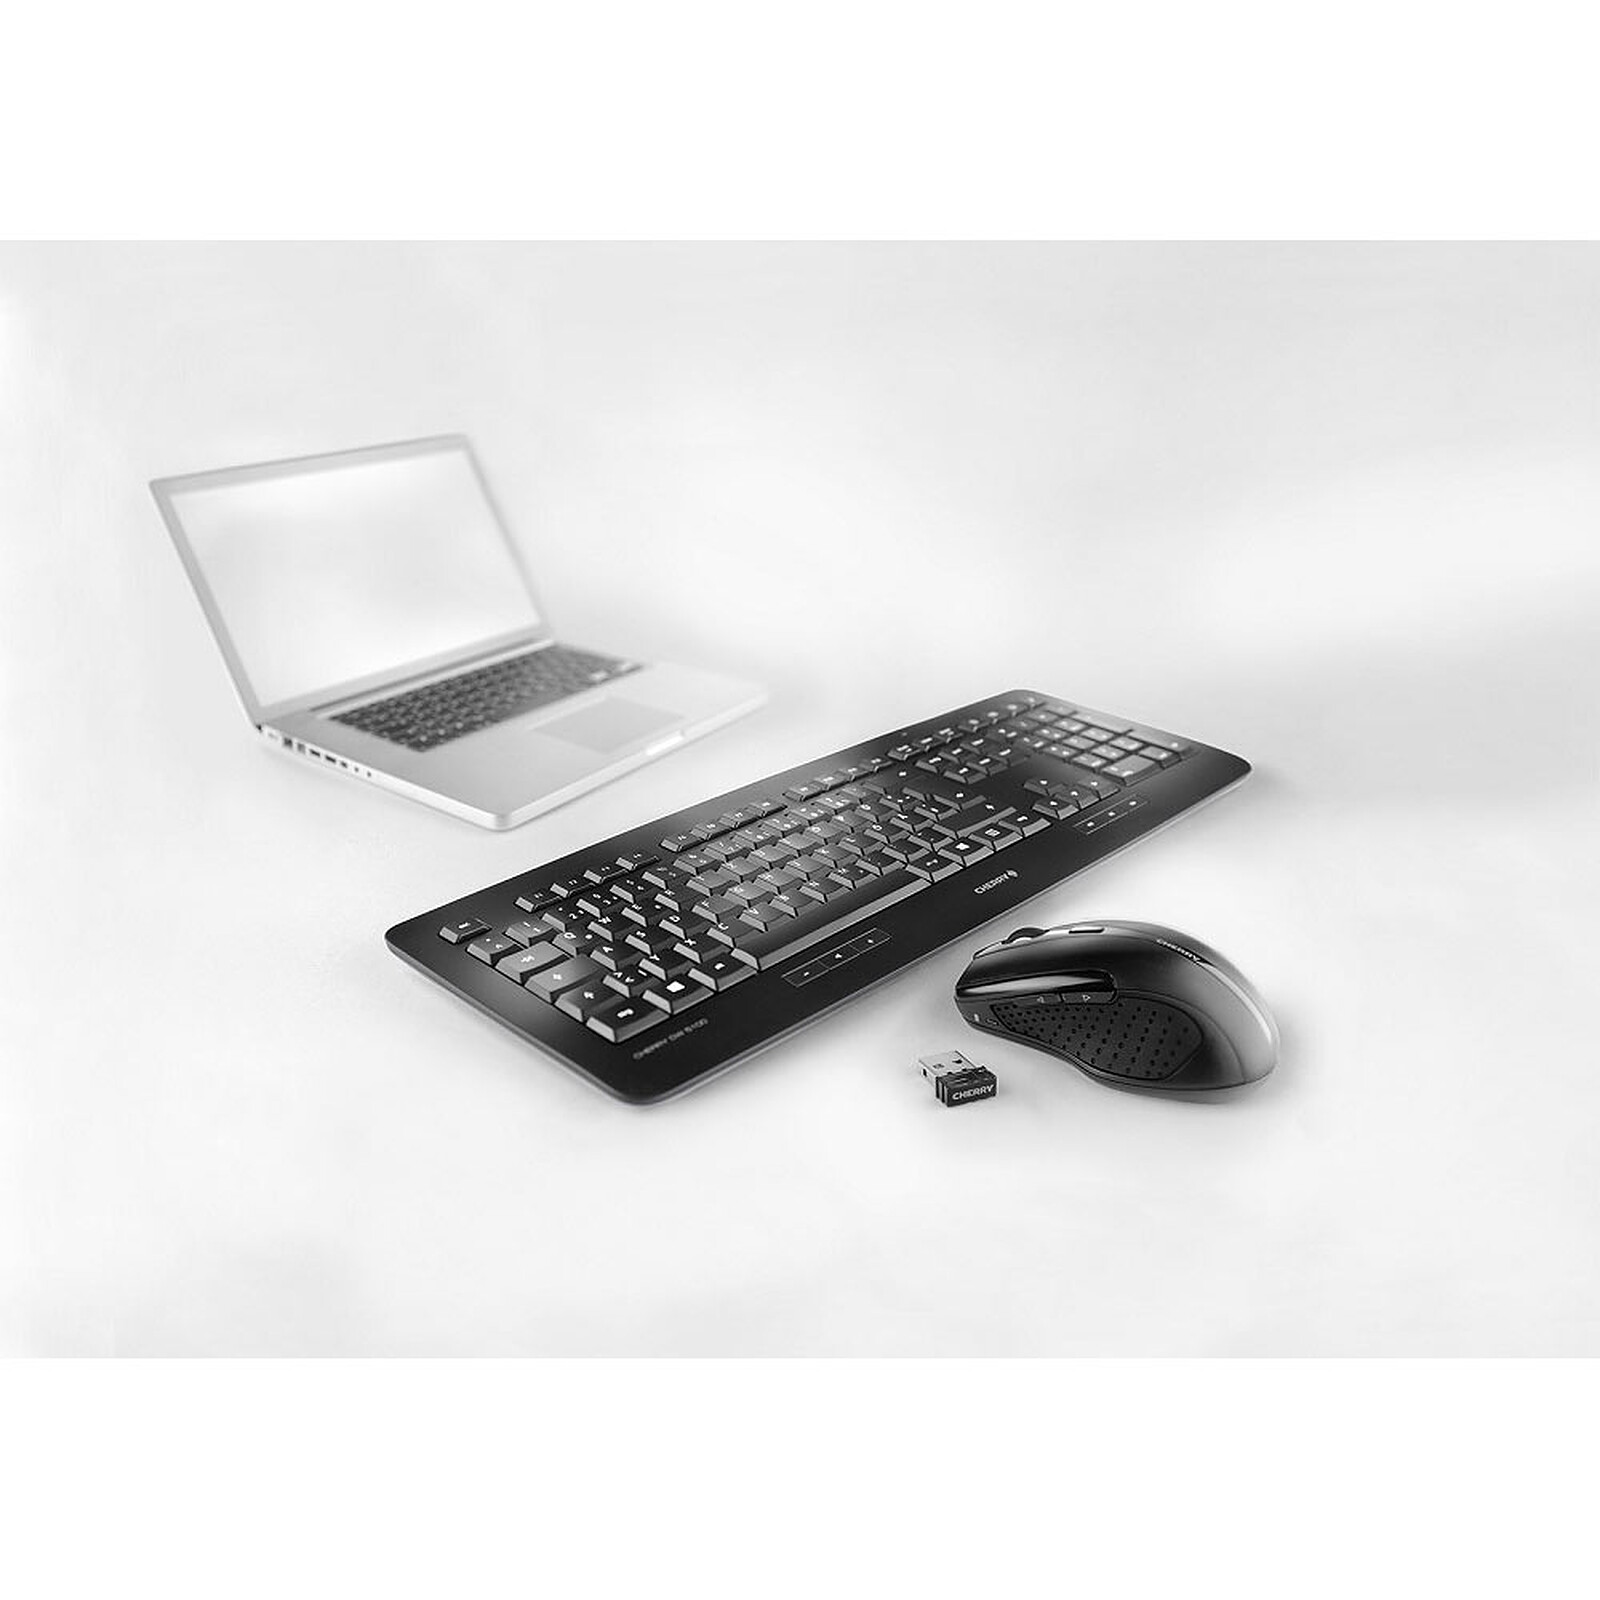 Cherry DW 5100 v2 - Keyboard & mouse set - LDLC 3-year warranty